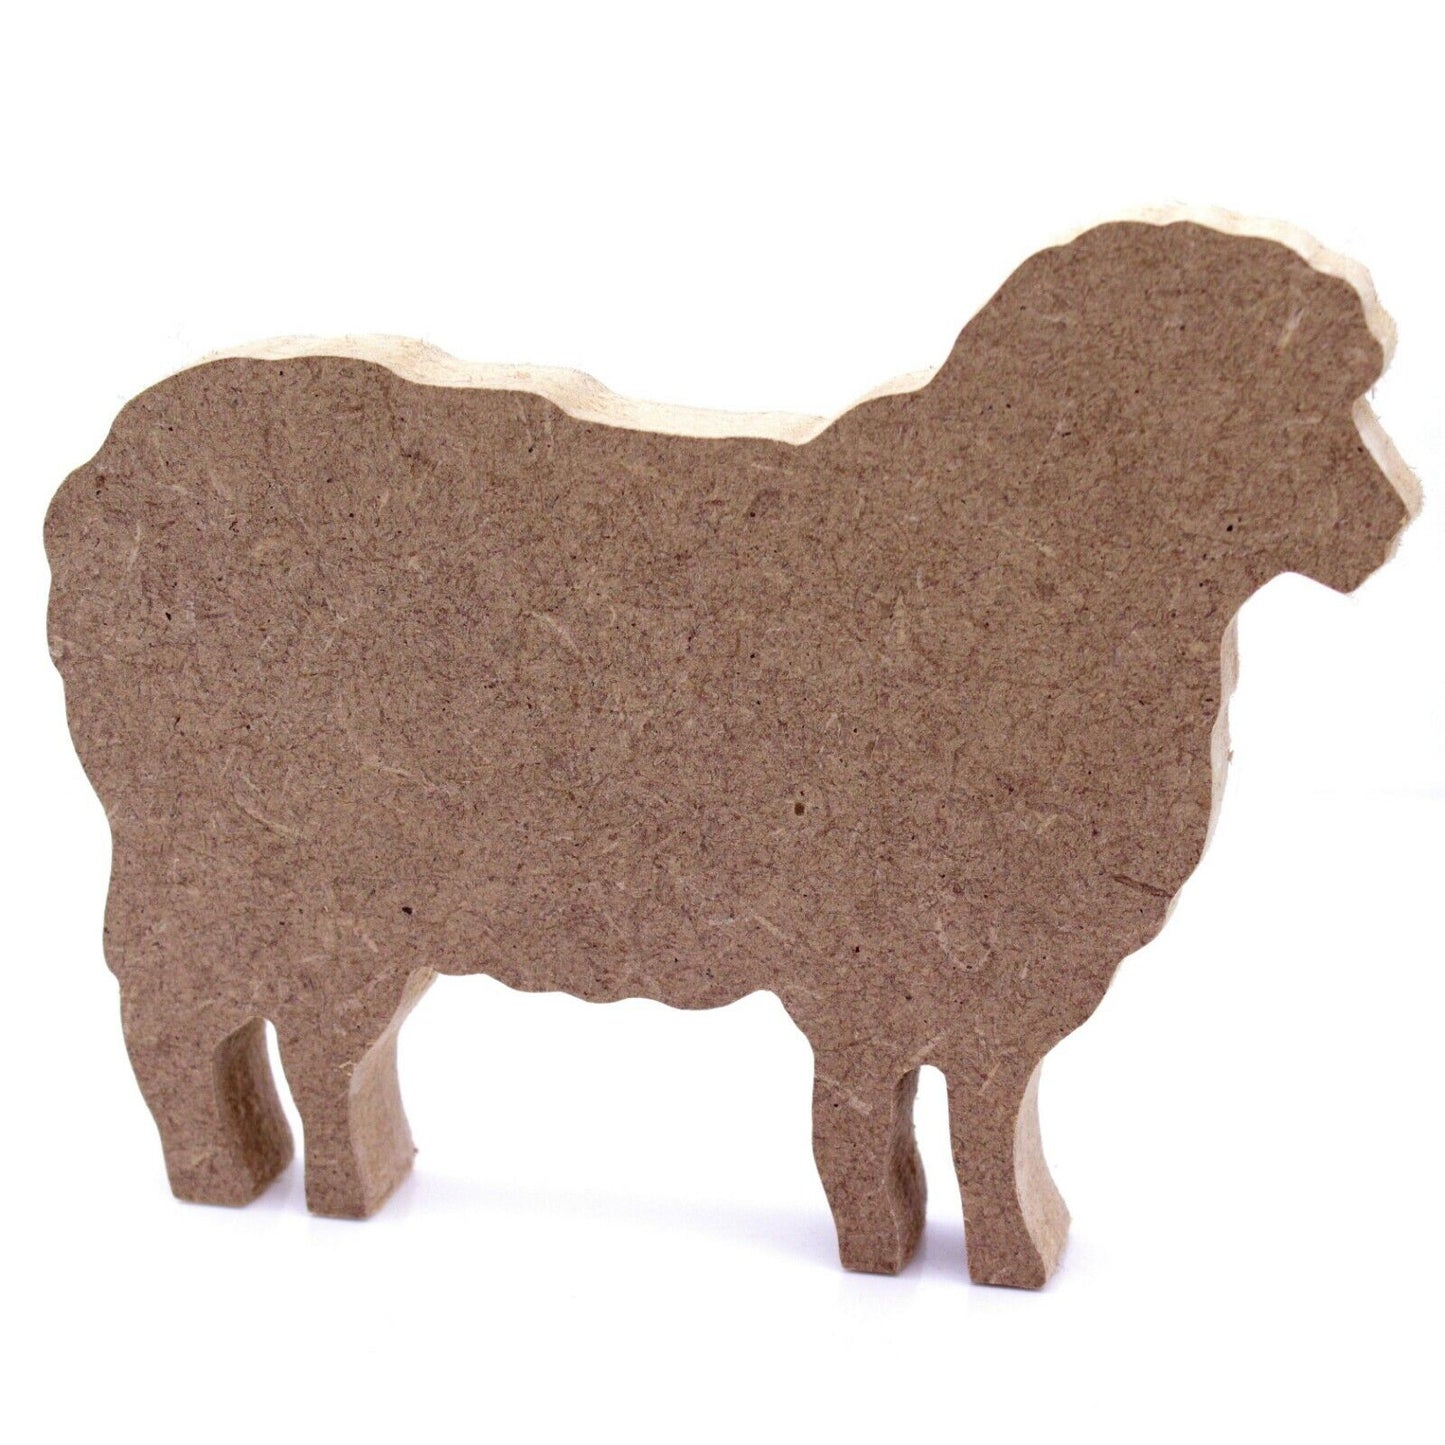 Free Standing 18mm MDF Sheep Craft Shape Various Sizes. Farm, Animal, Wool